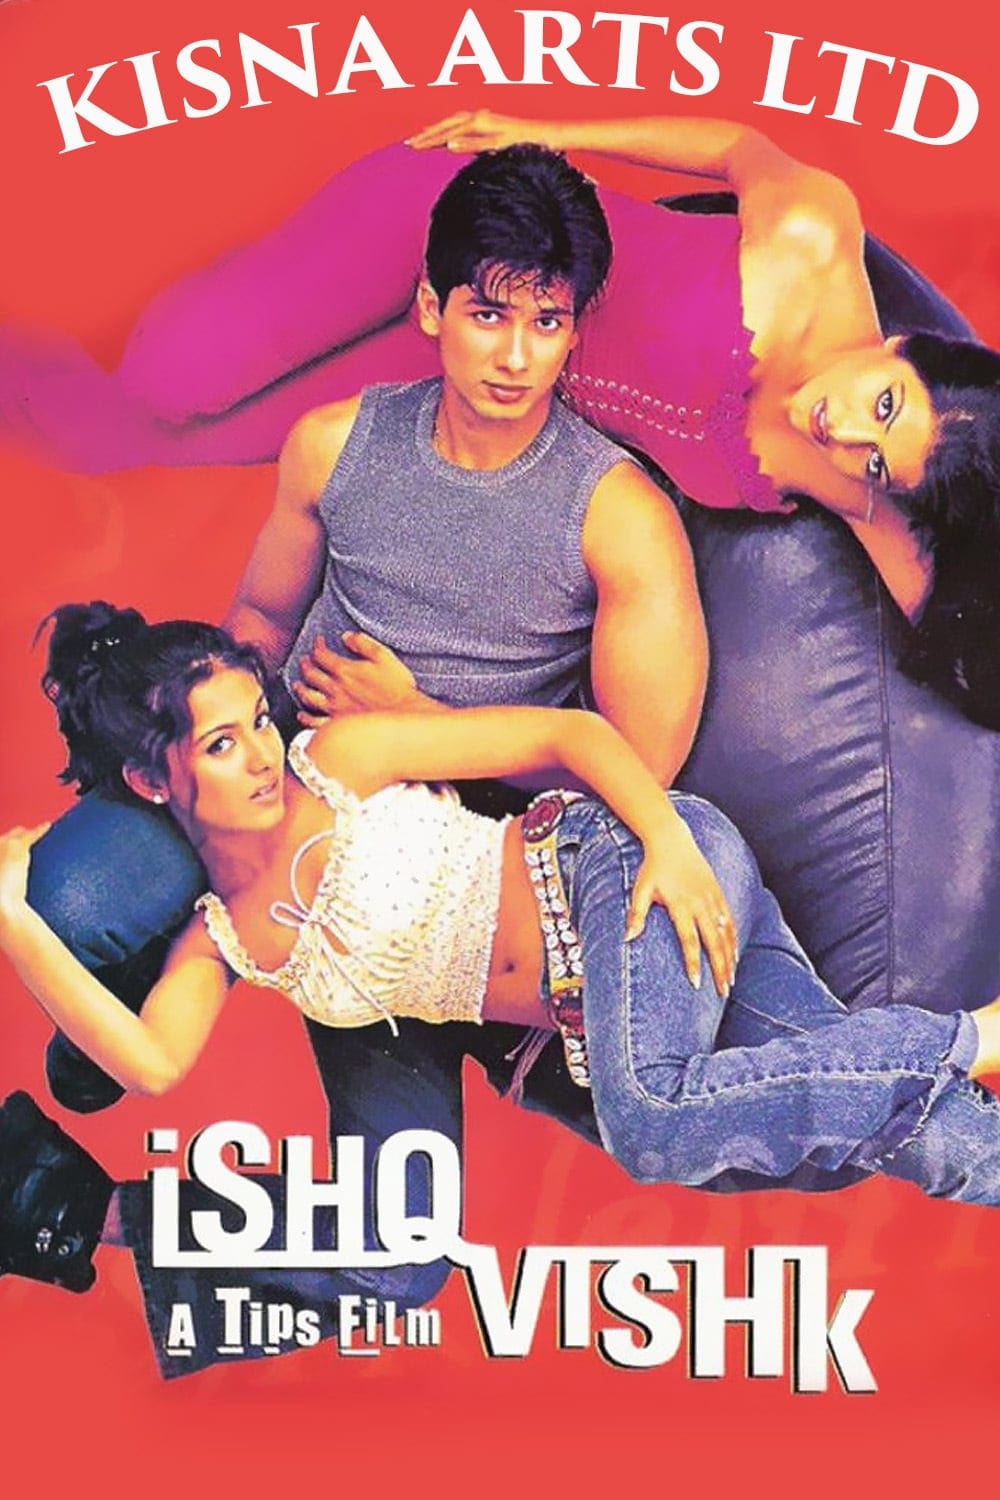 Poster for the movie "Ishq Vishk"